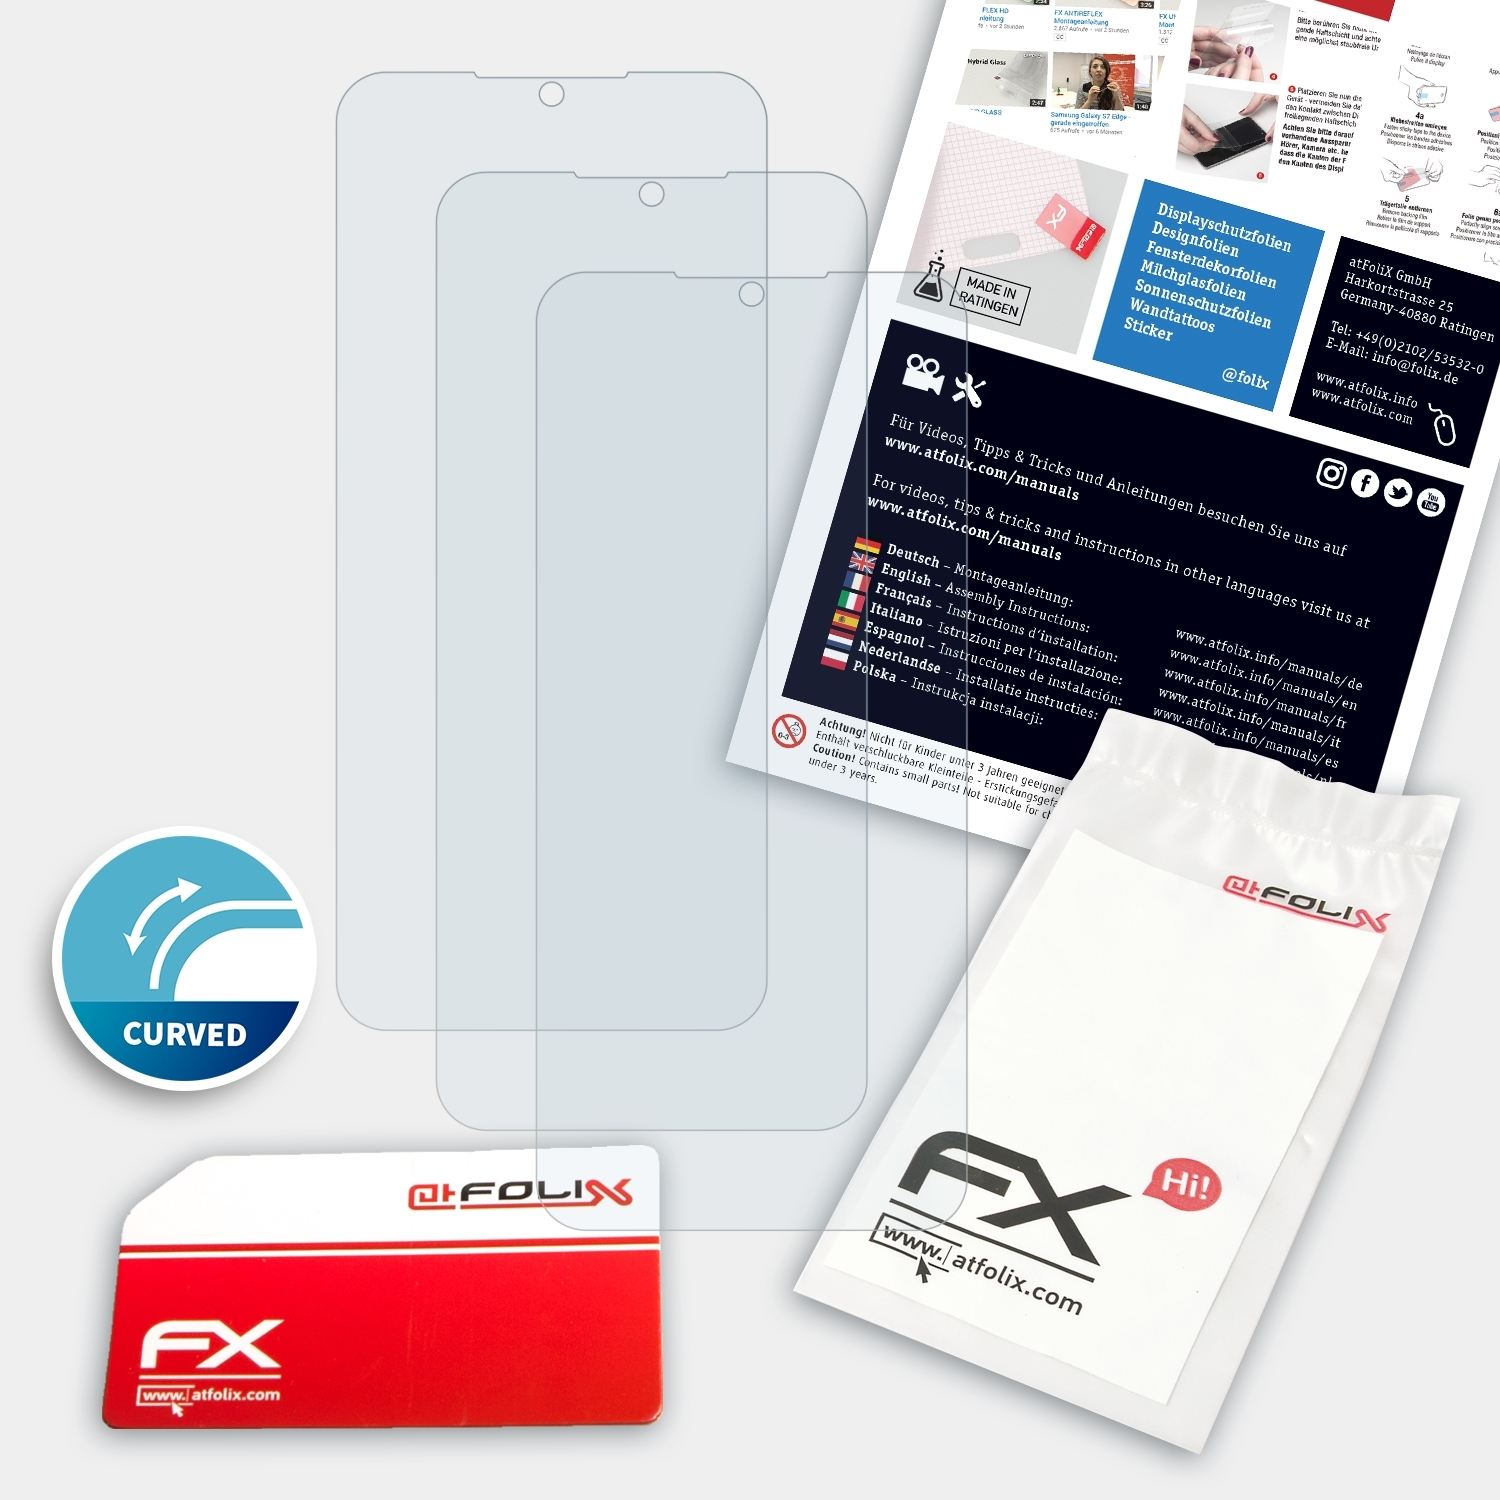 ATFOLIX 3x FX-ActiFleX Displayschutz(für Pro) N40 DOOGEE